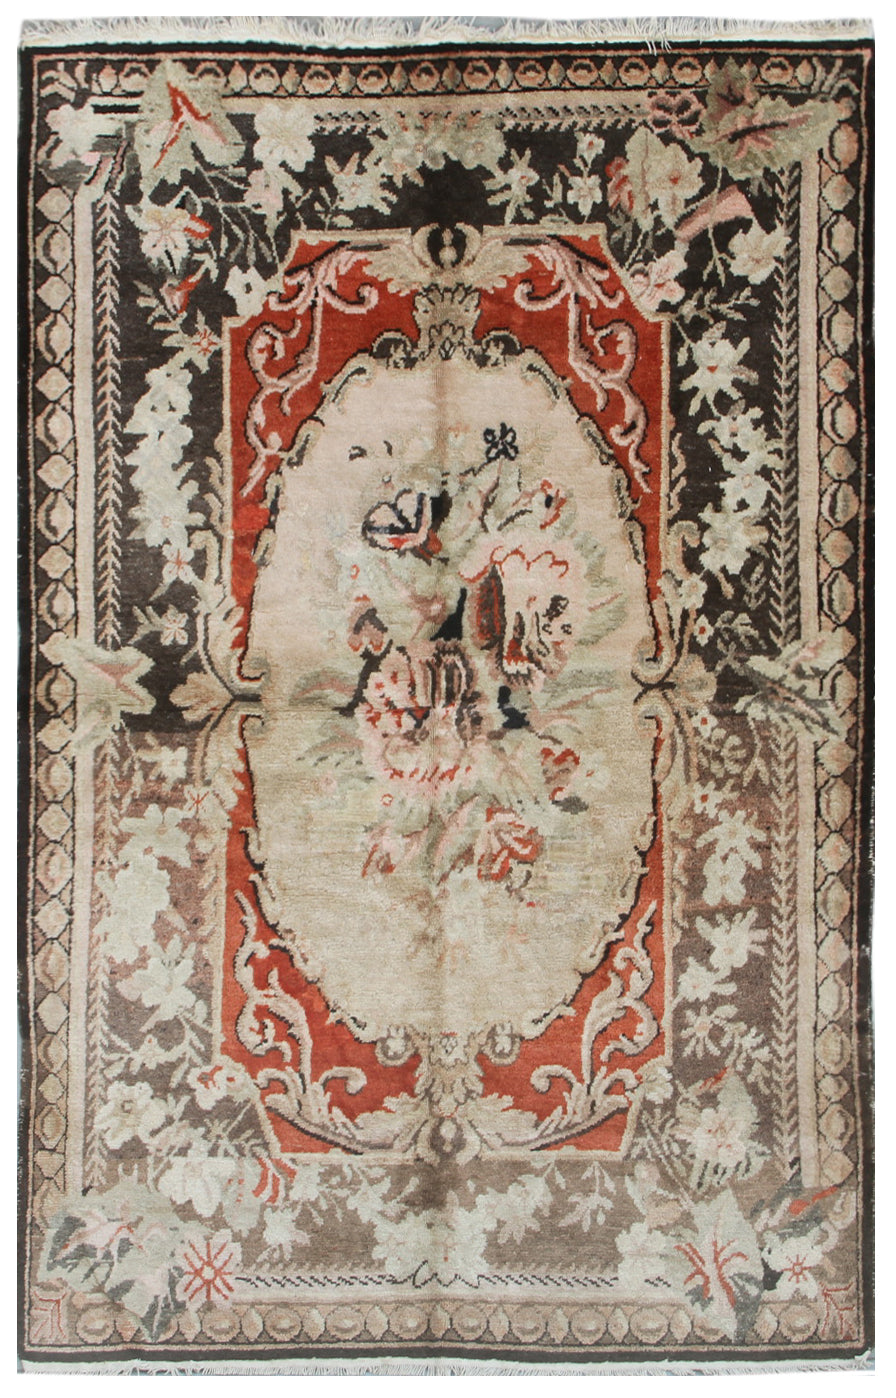 6.06 x 4.04 Antique Samarkand